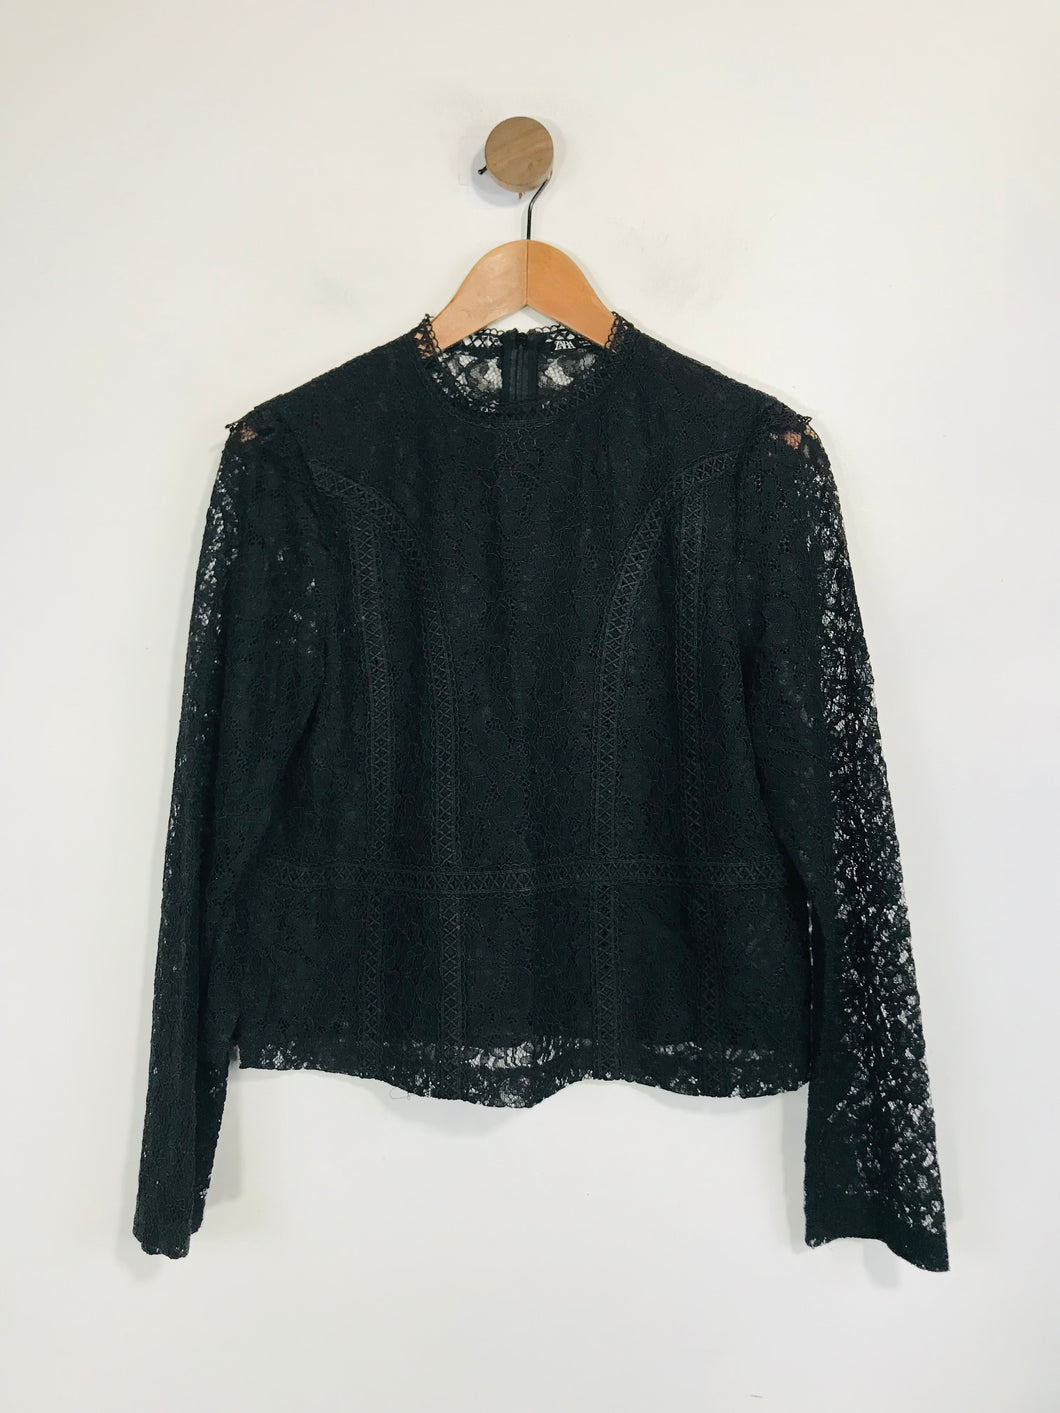 Zara Women's Lace Sheer Blouse | M UK10-12 | Black